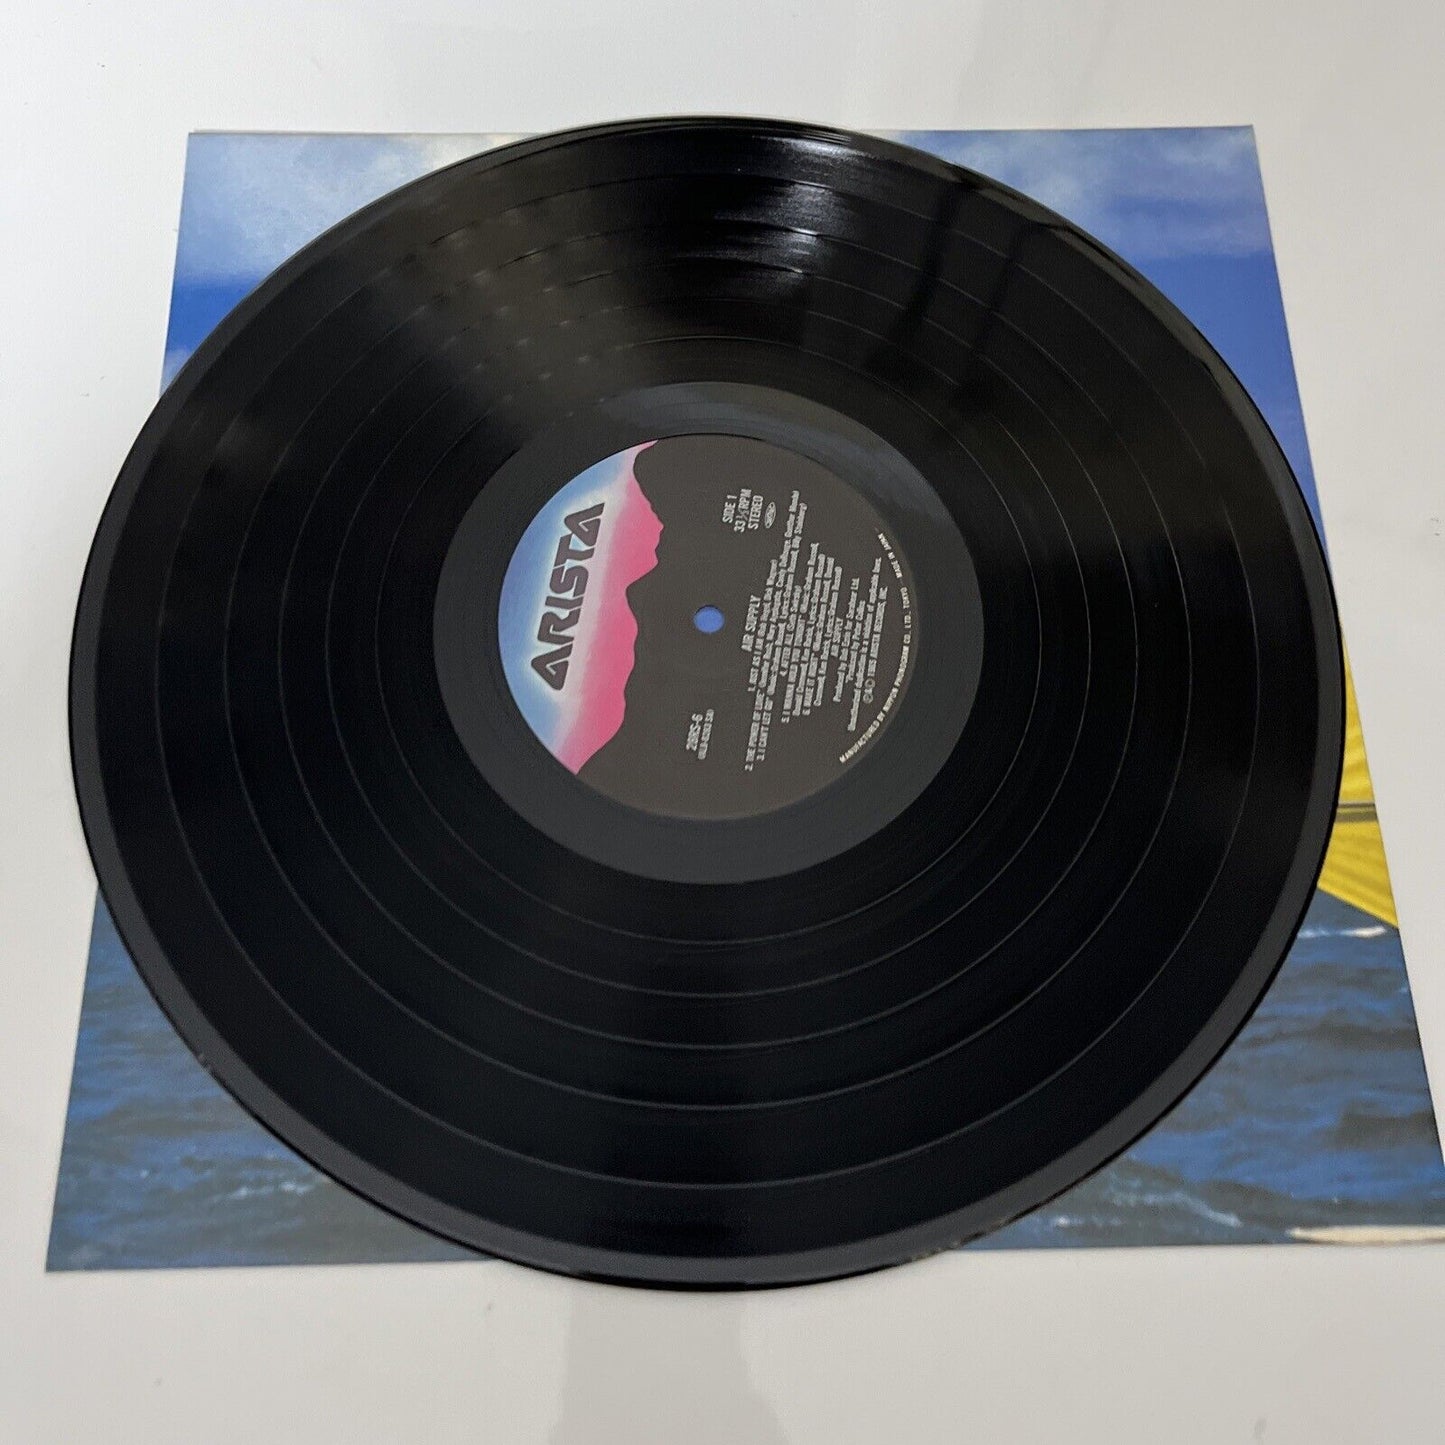 Air Supply LP 1985 Vinyl Record Japan Obi 28RS-6